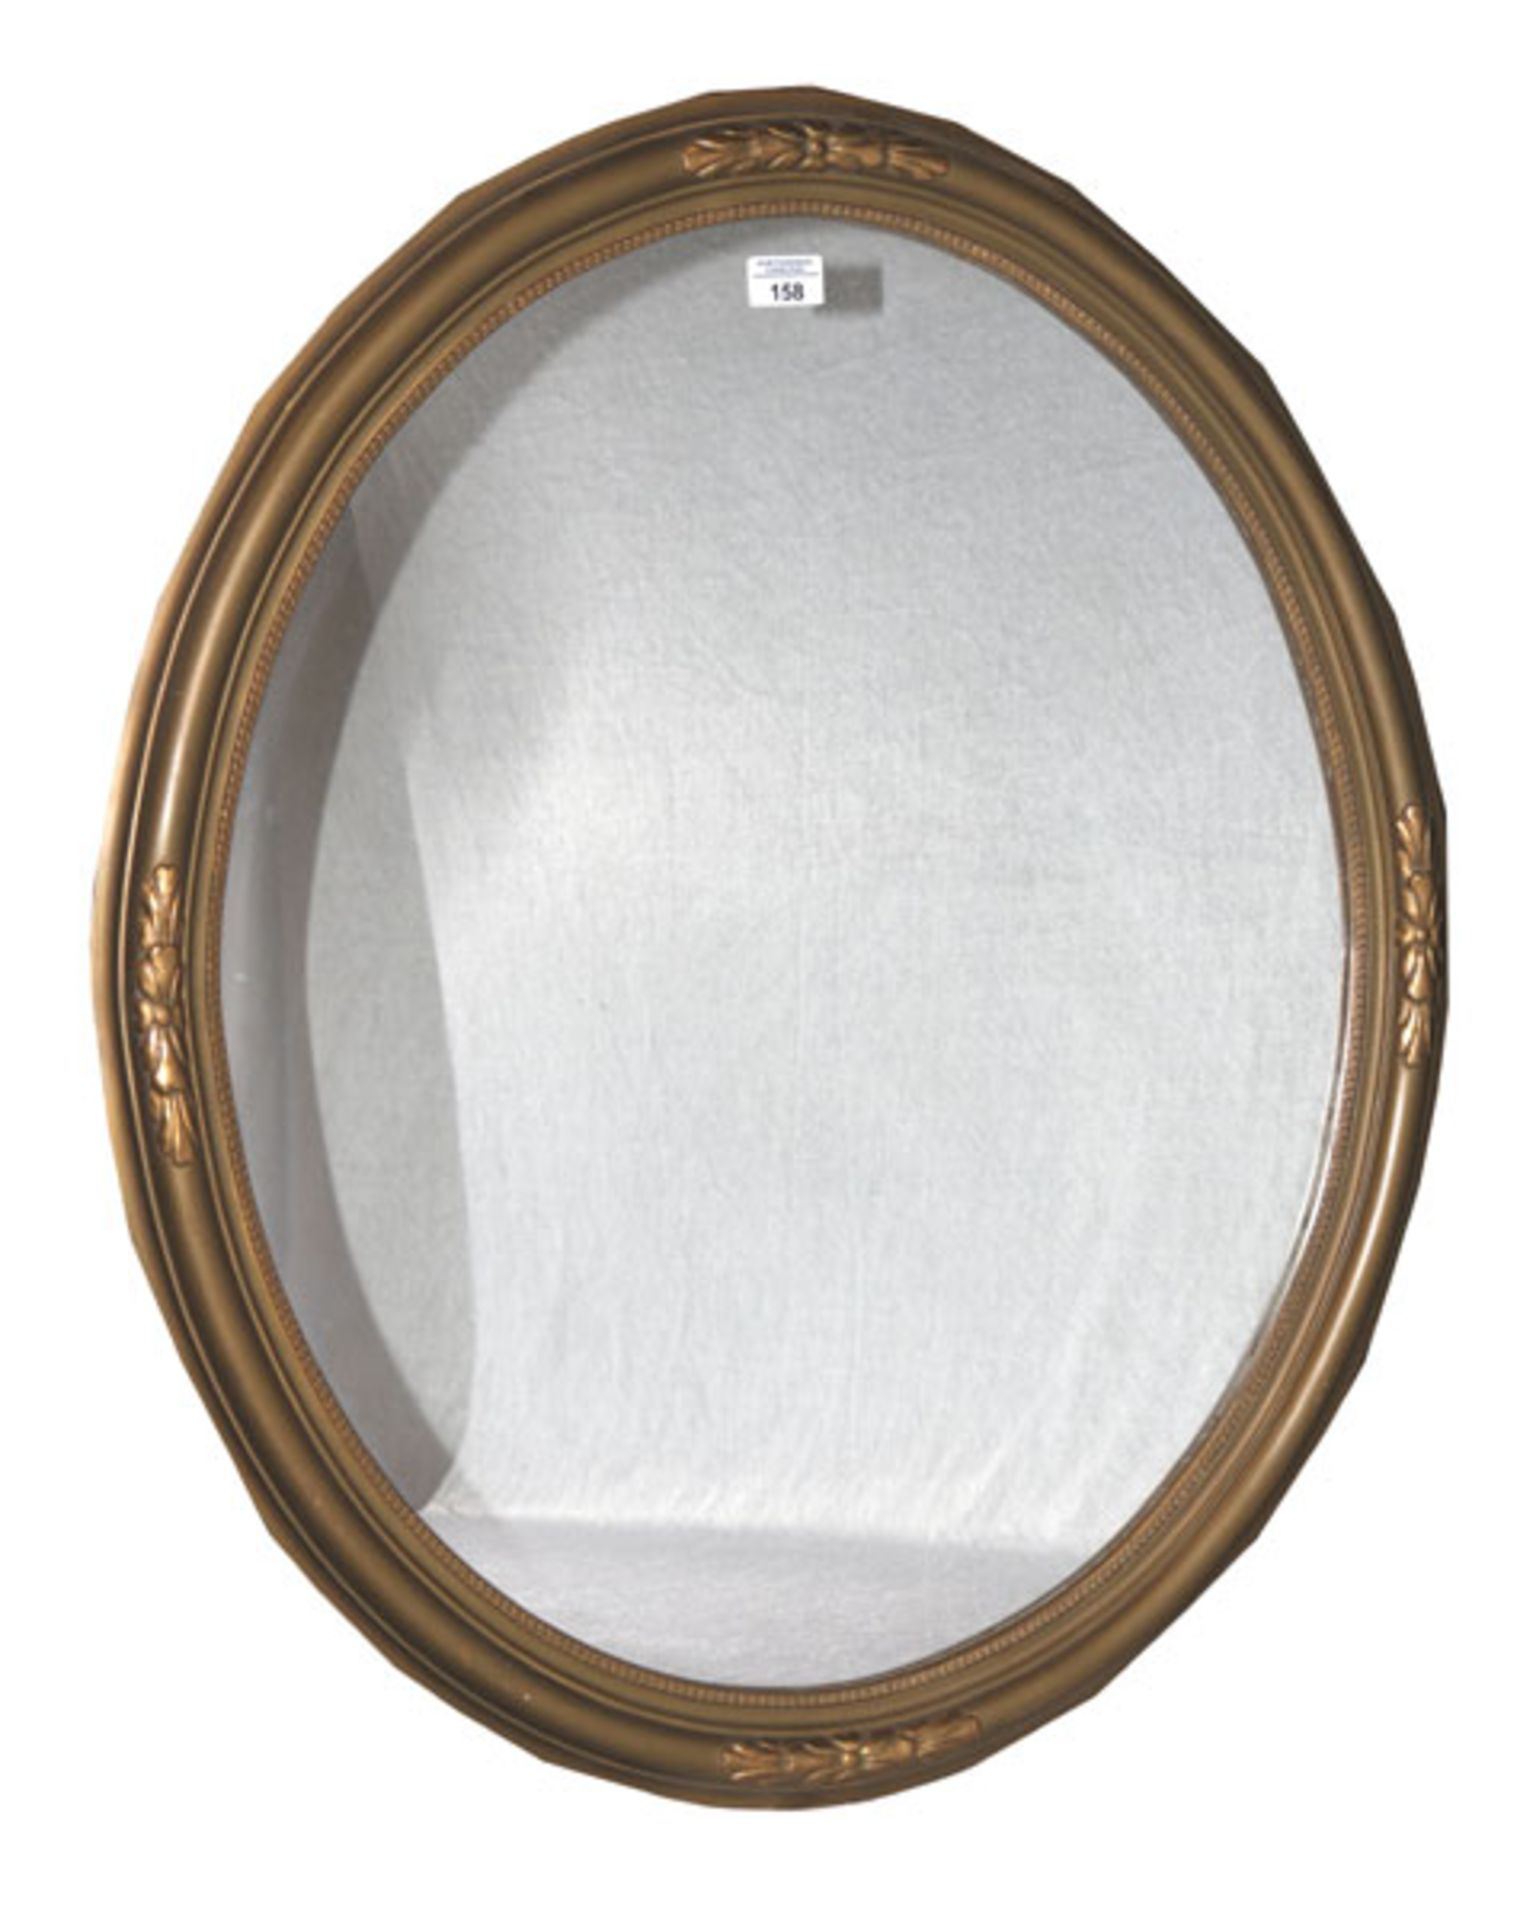 Wandspiegel in ovaler Form in Goldrahmen, beschädigt, 86 cm x 72 cm